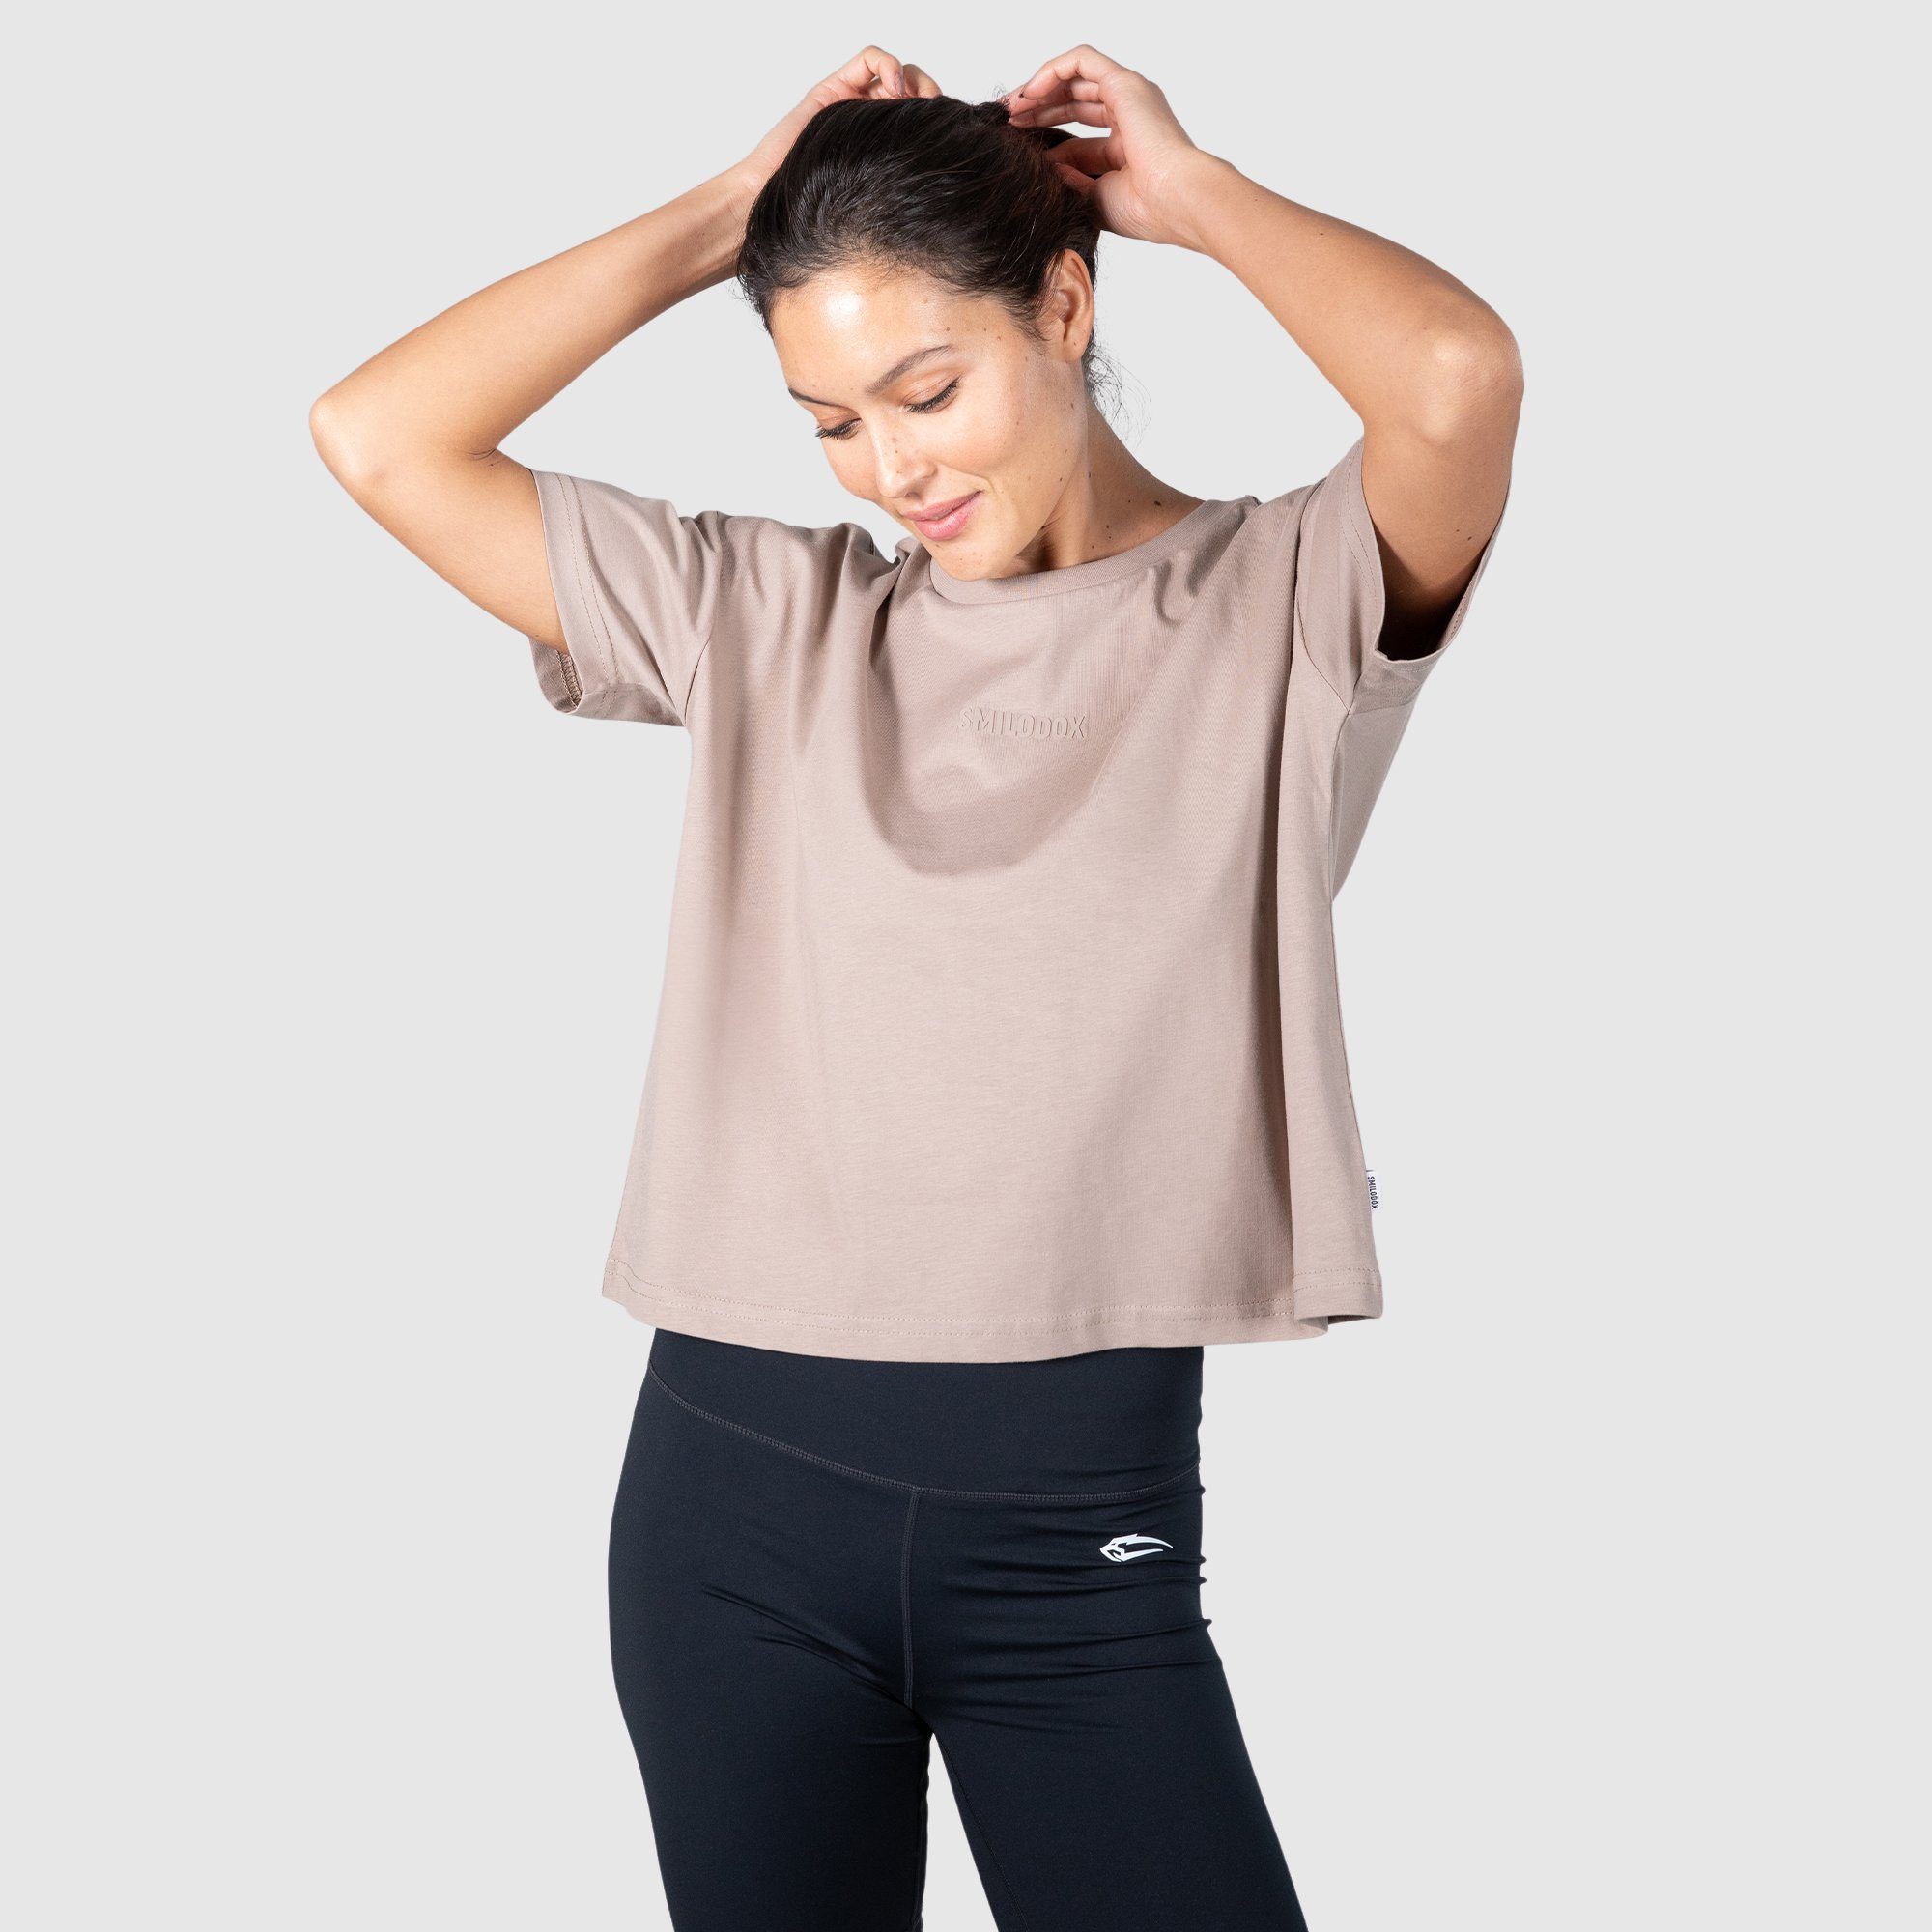 T-Shirt Giana Smilodox Baumwolle 100% Hellbraun Oversize,